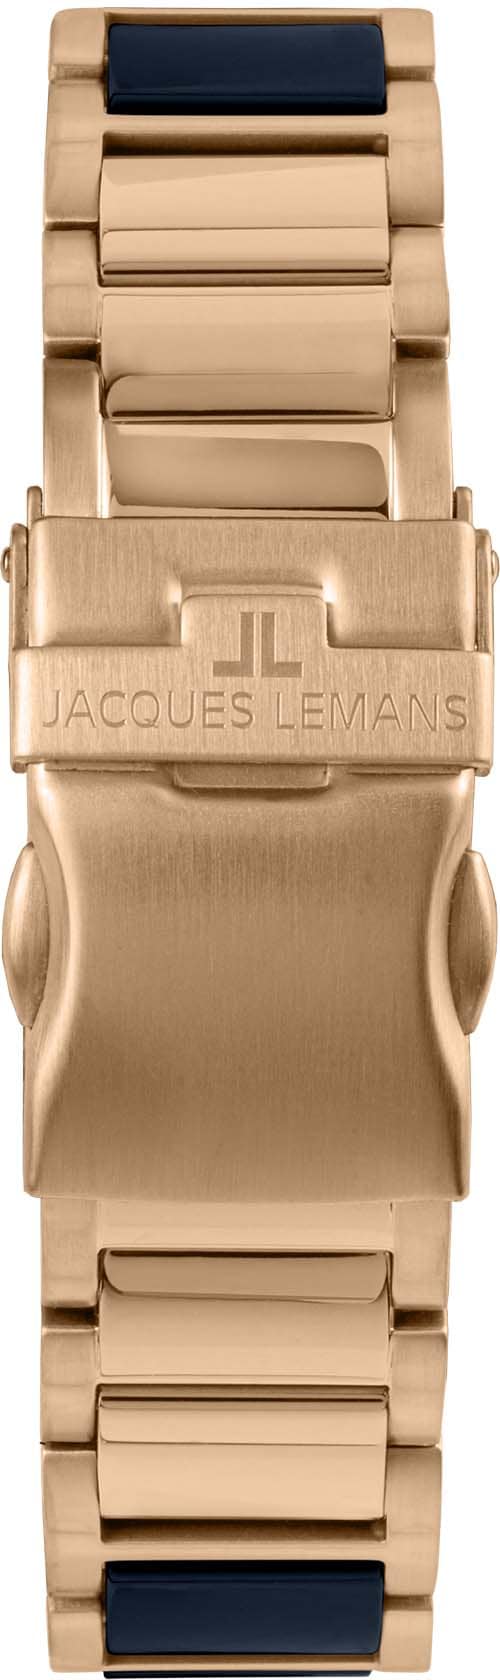 Jacques Lemans Keramikuhr »Liverpool, 42-12H«, Quarzuhr, Armbanduhr, Damenuhr, Datum, Leuchtzeiger